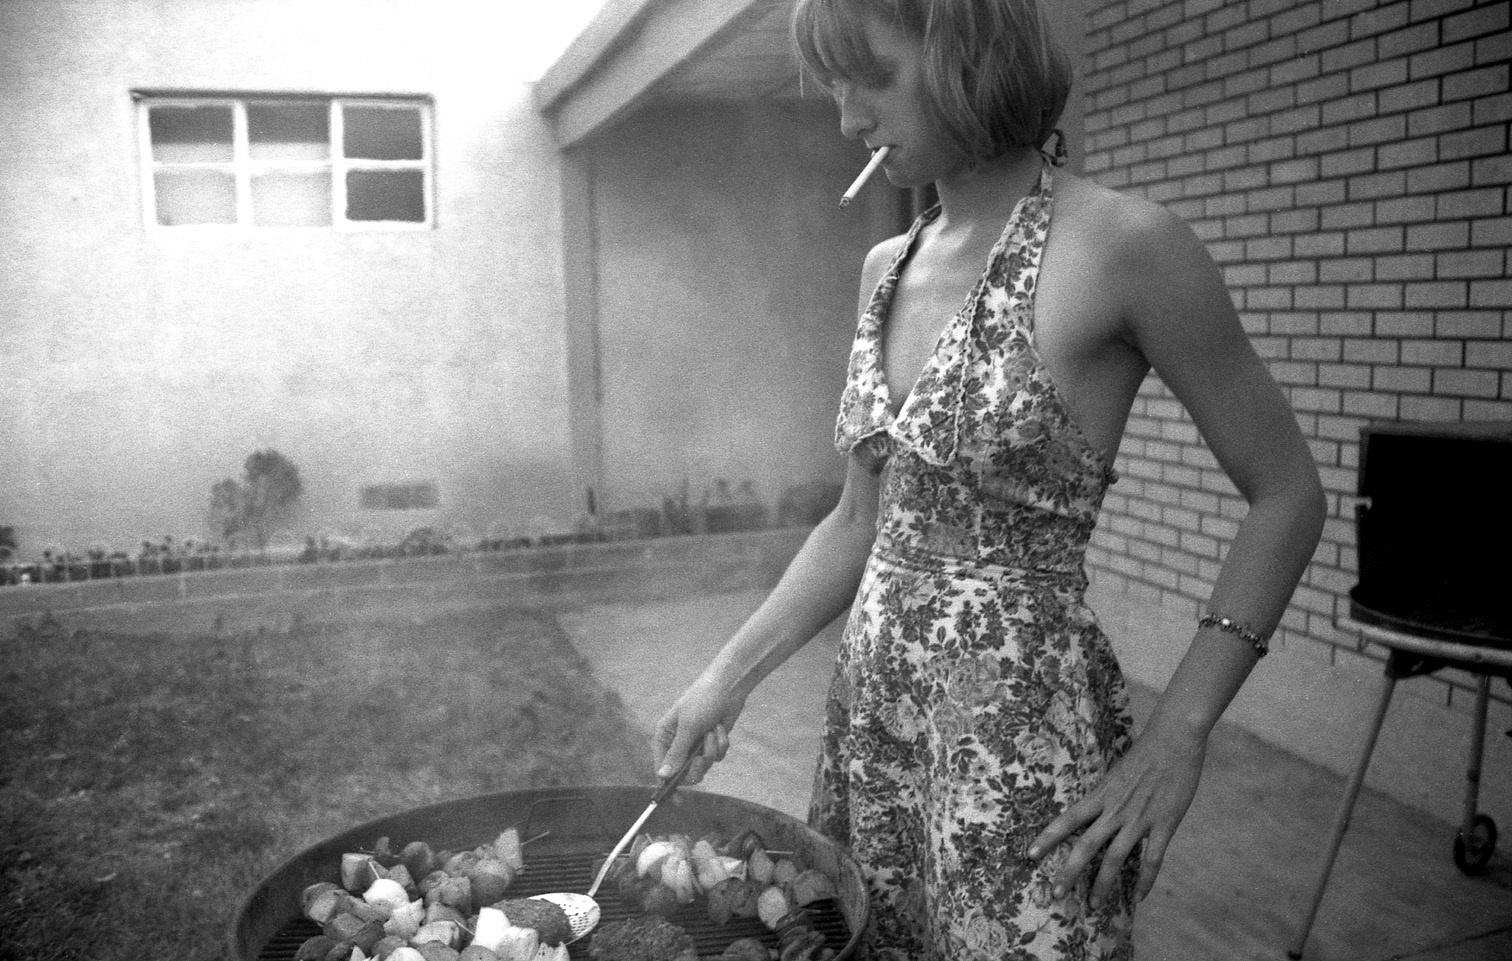 Le BBQ de Sarah, quatrième juillet, Albuquerque, NM, 1995